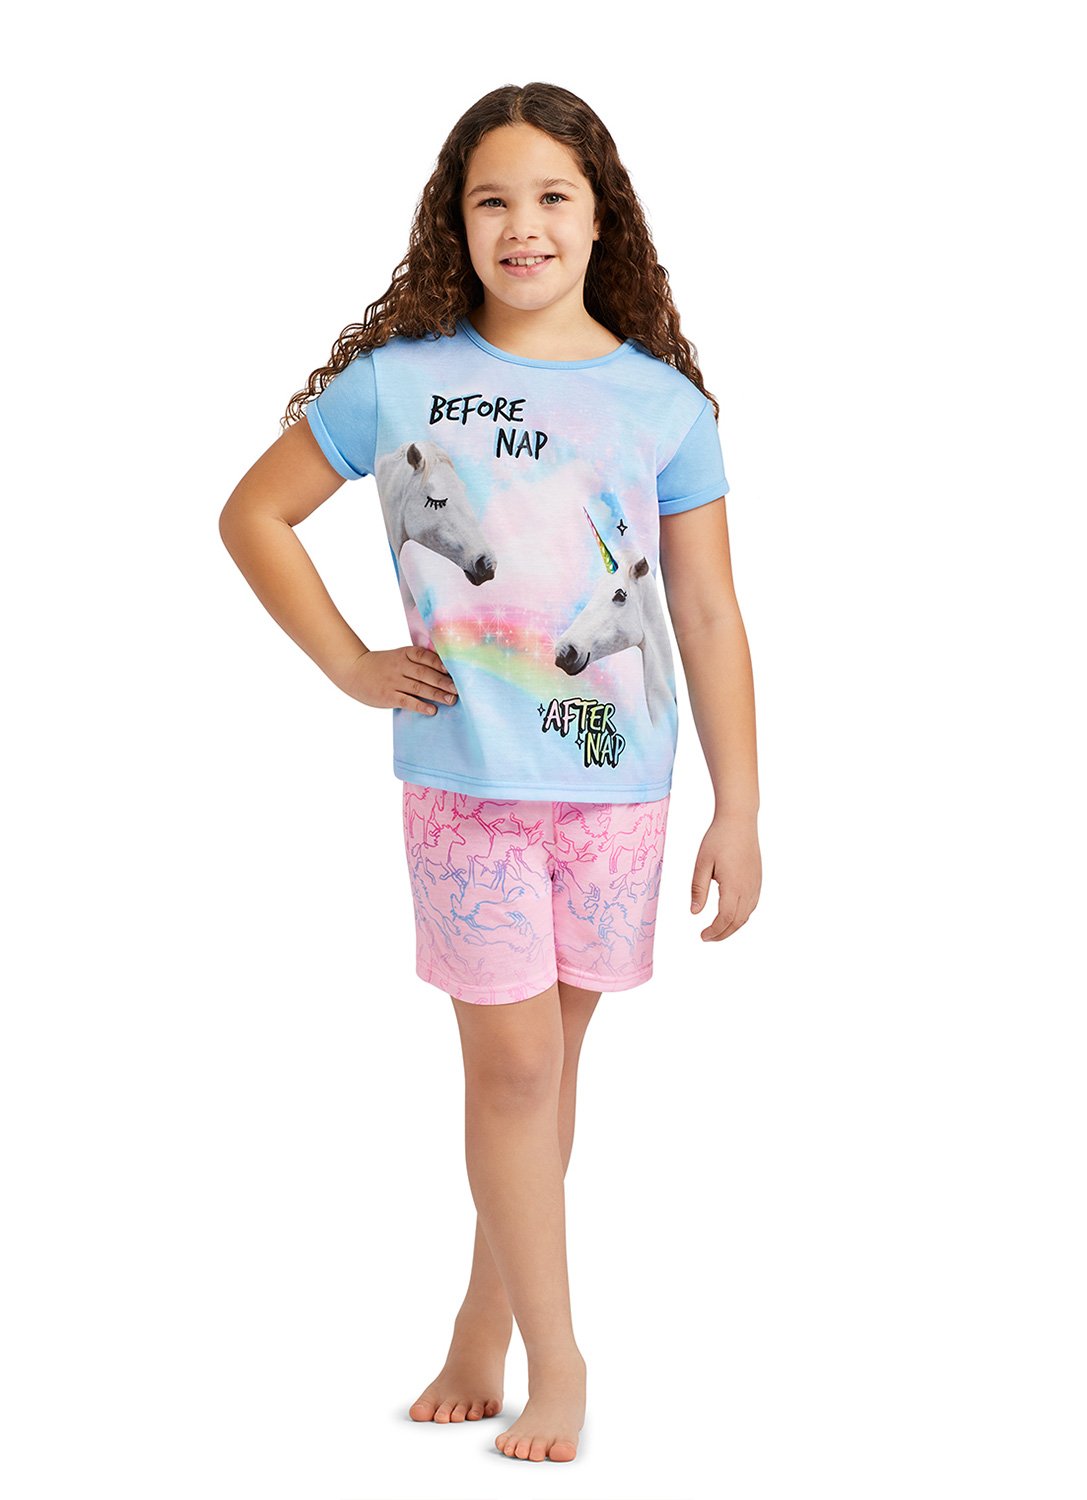 Girl wearing Unicorn Glitter Print Top and Shorts